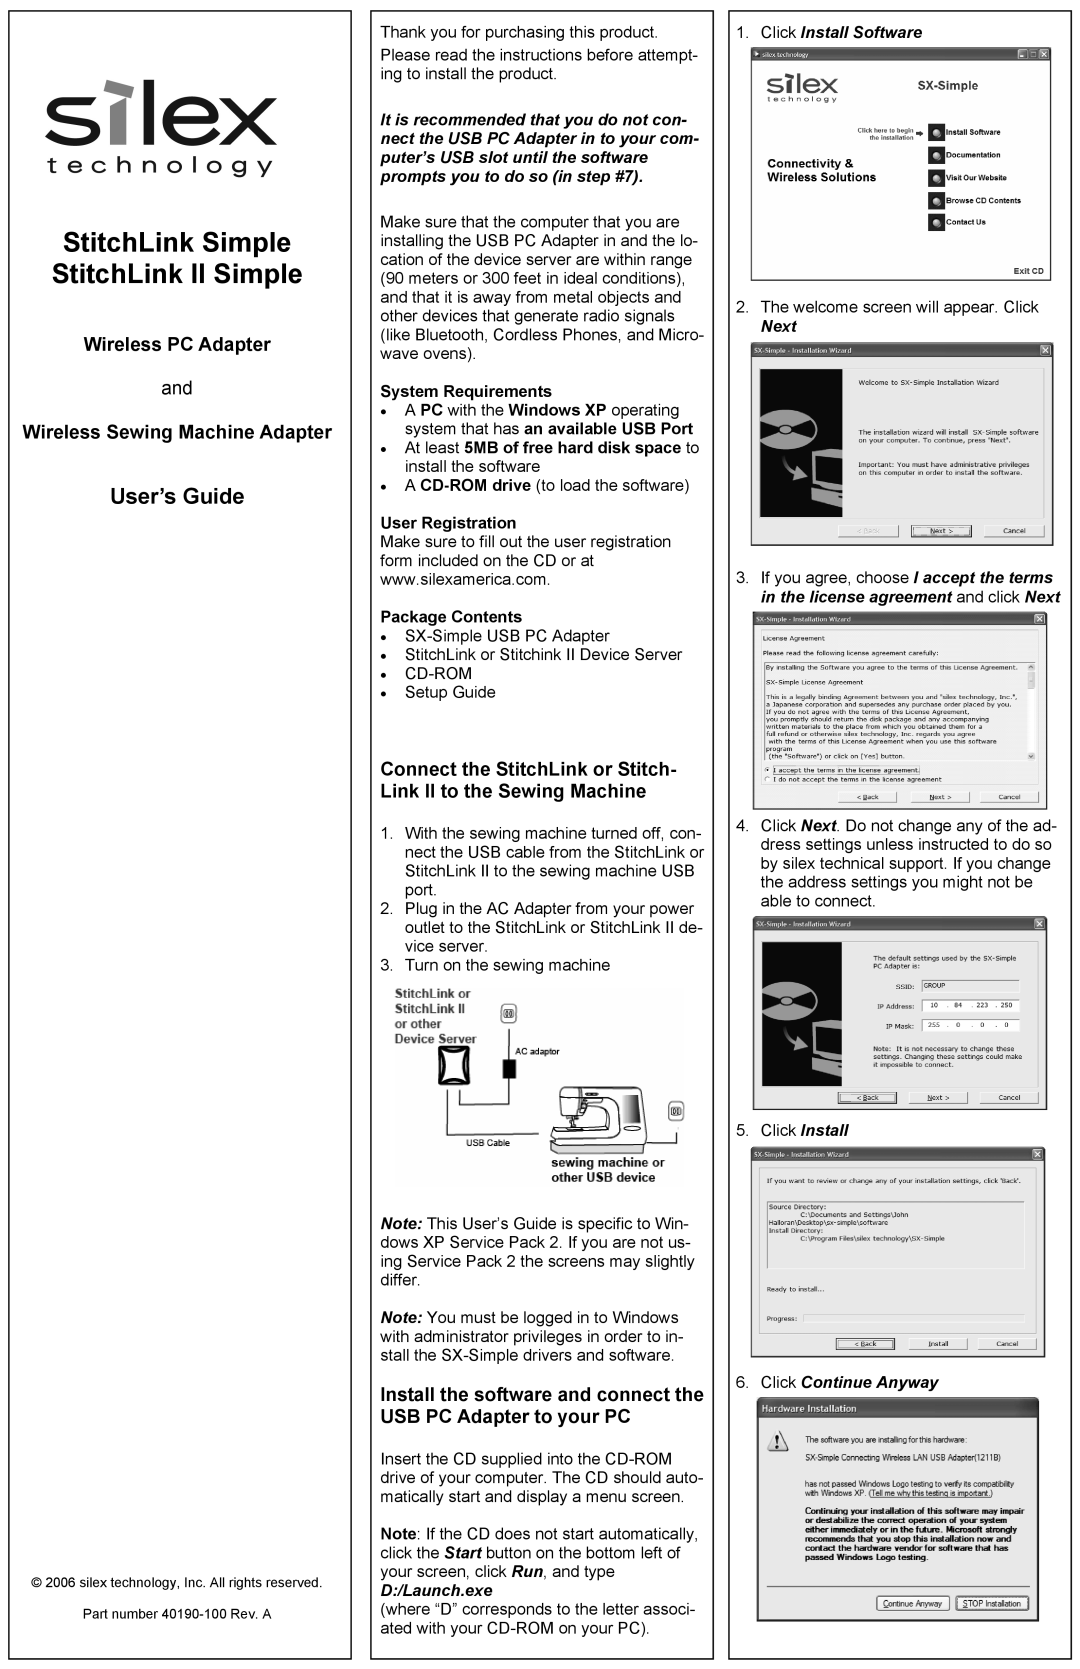 Silex technology 40190-100 setup guide User’s Guide, D/Launch.exe, Click Install Software, Next, Wireless PC Adapter 